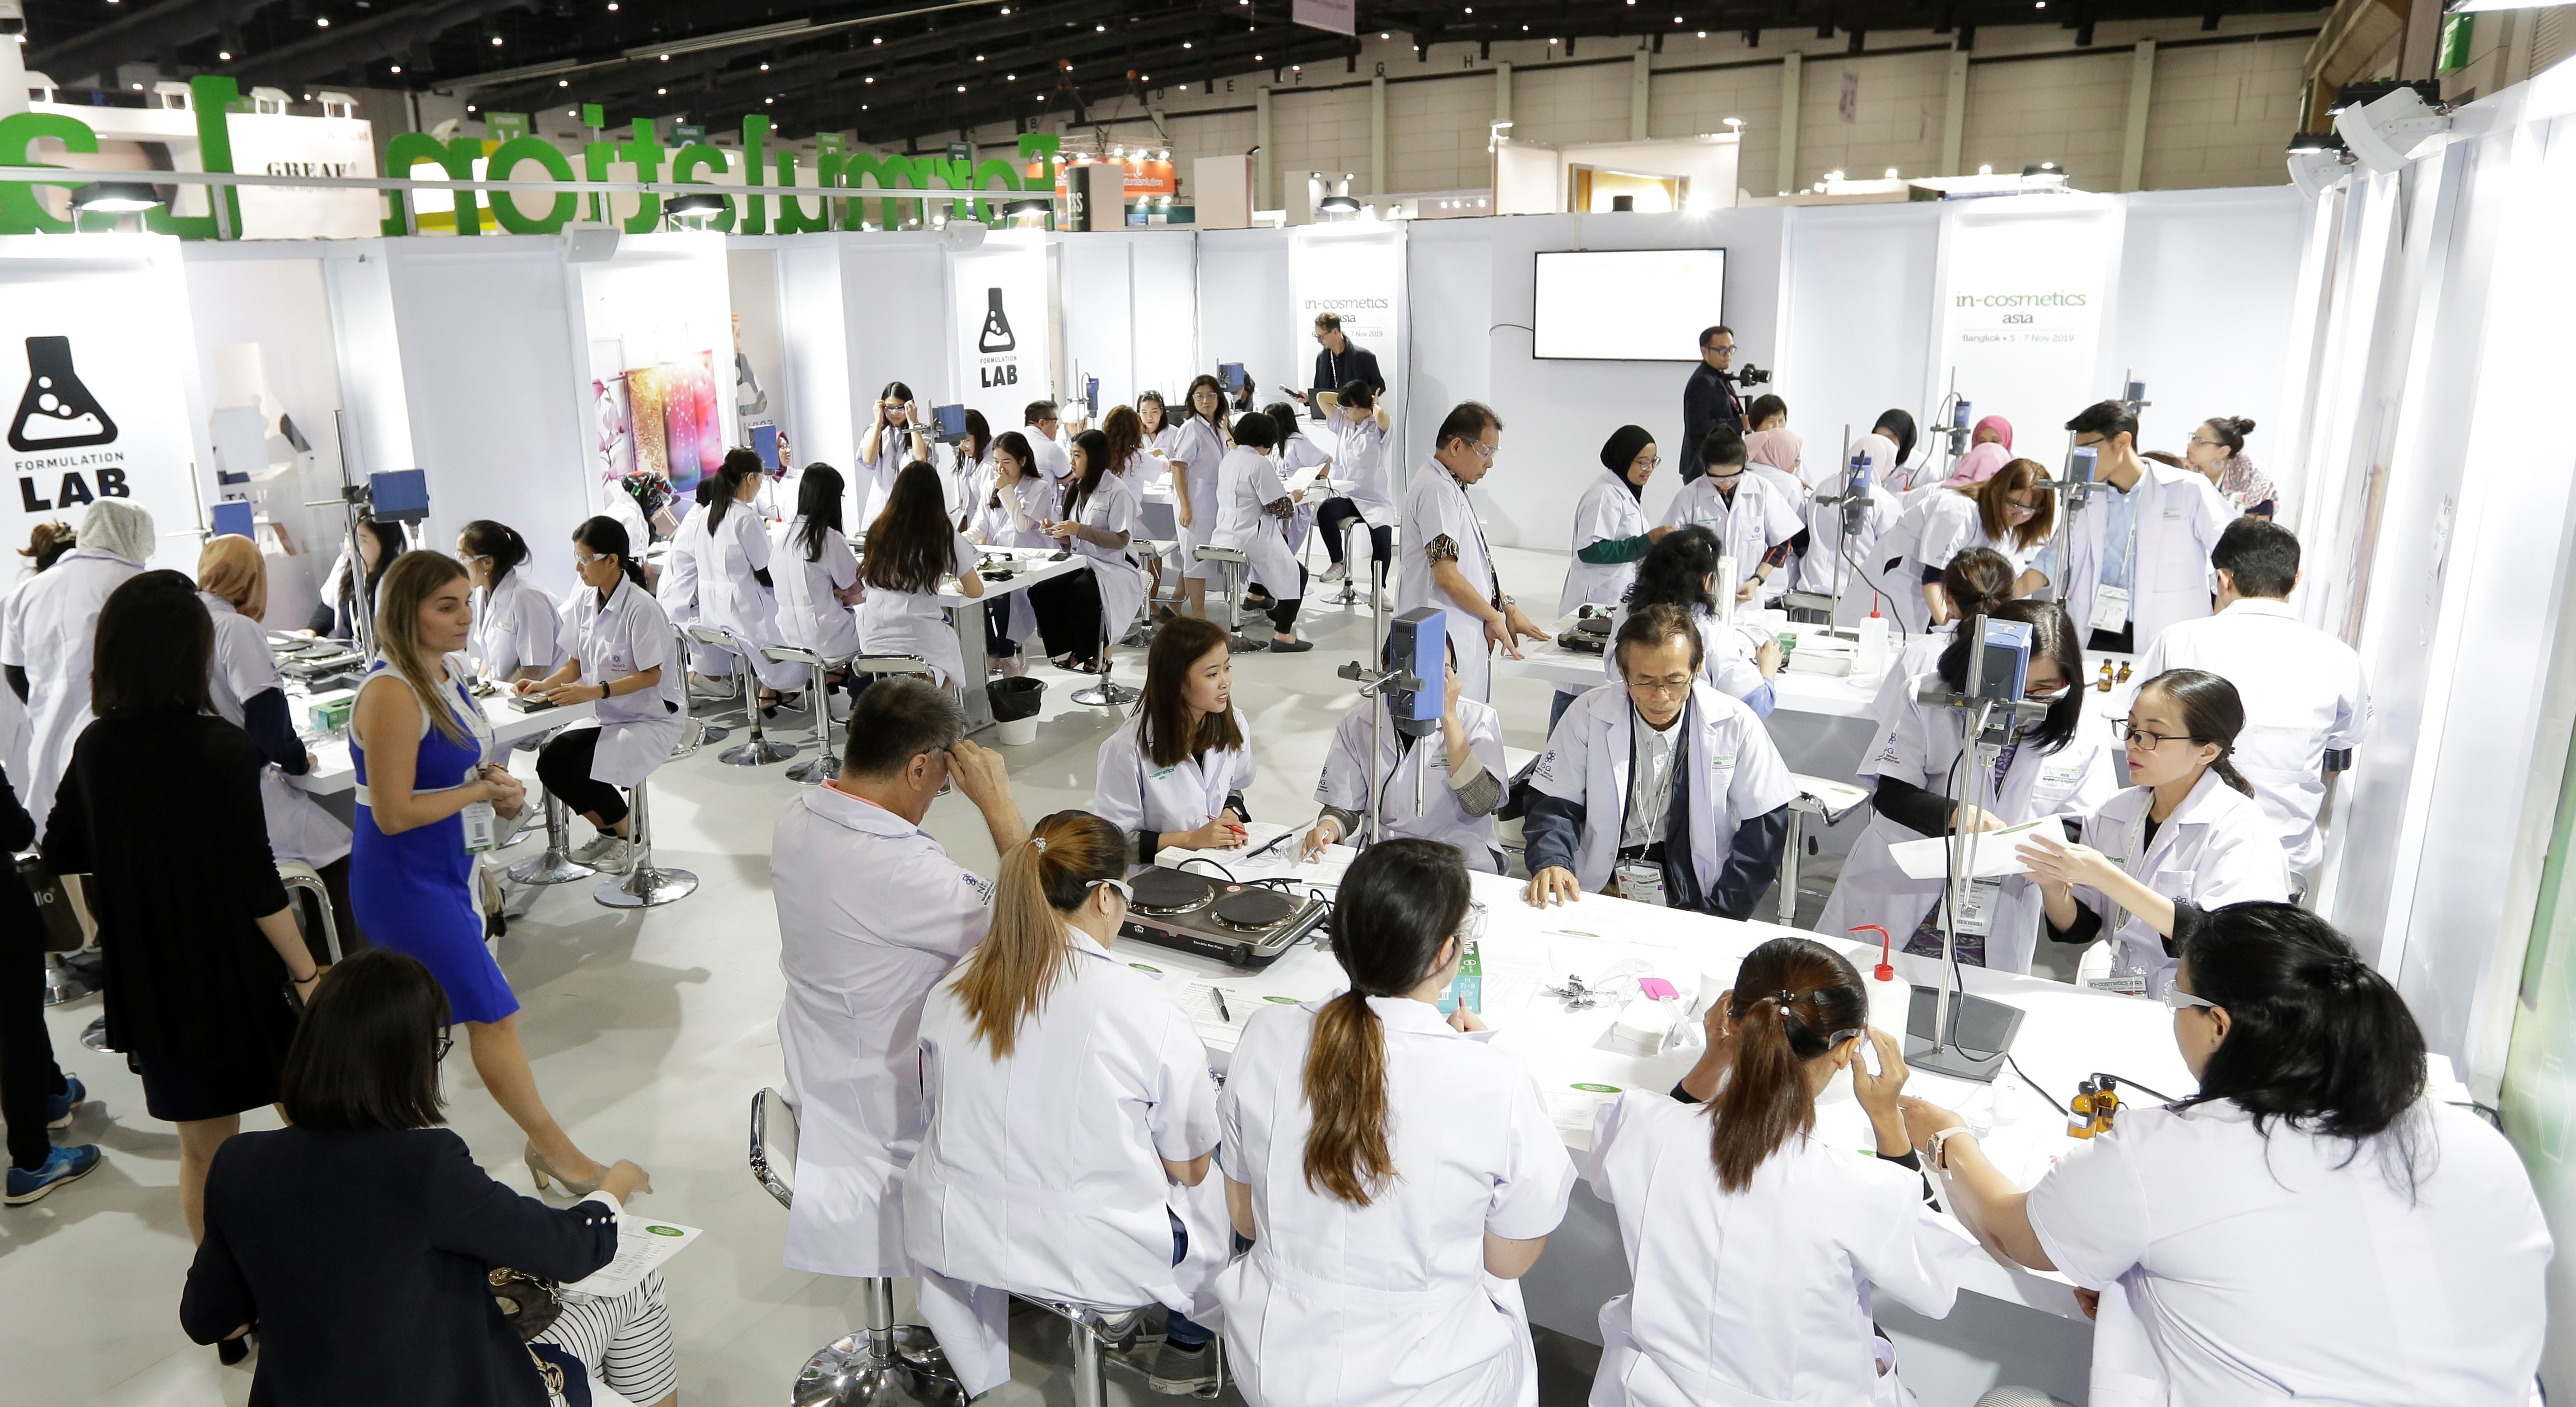 in-cosmetics Asia returns to Bangkok in November